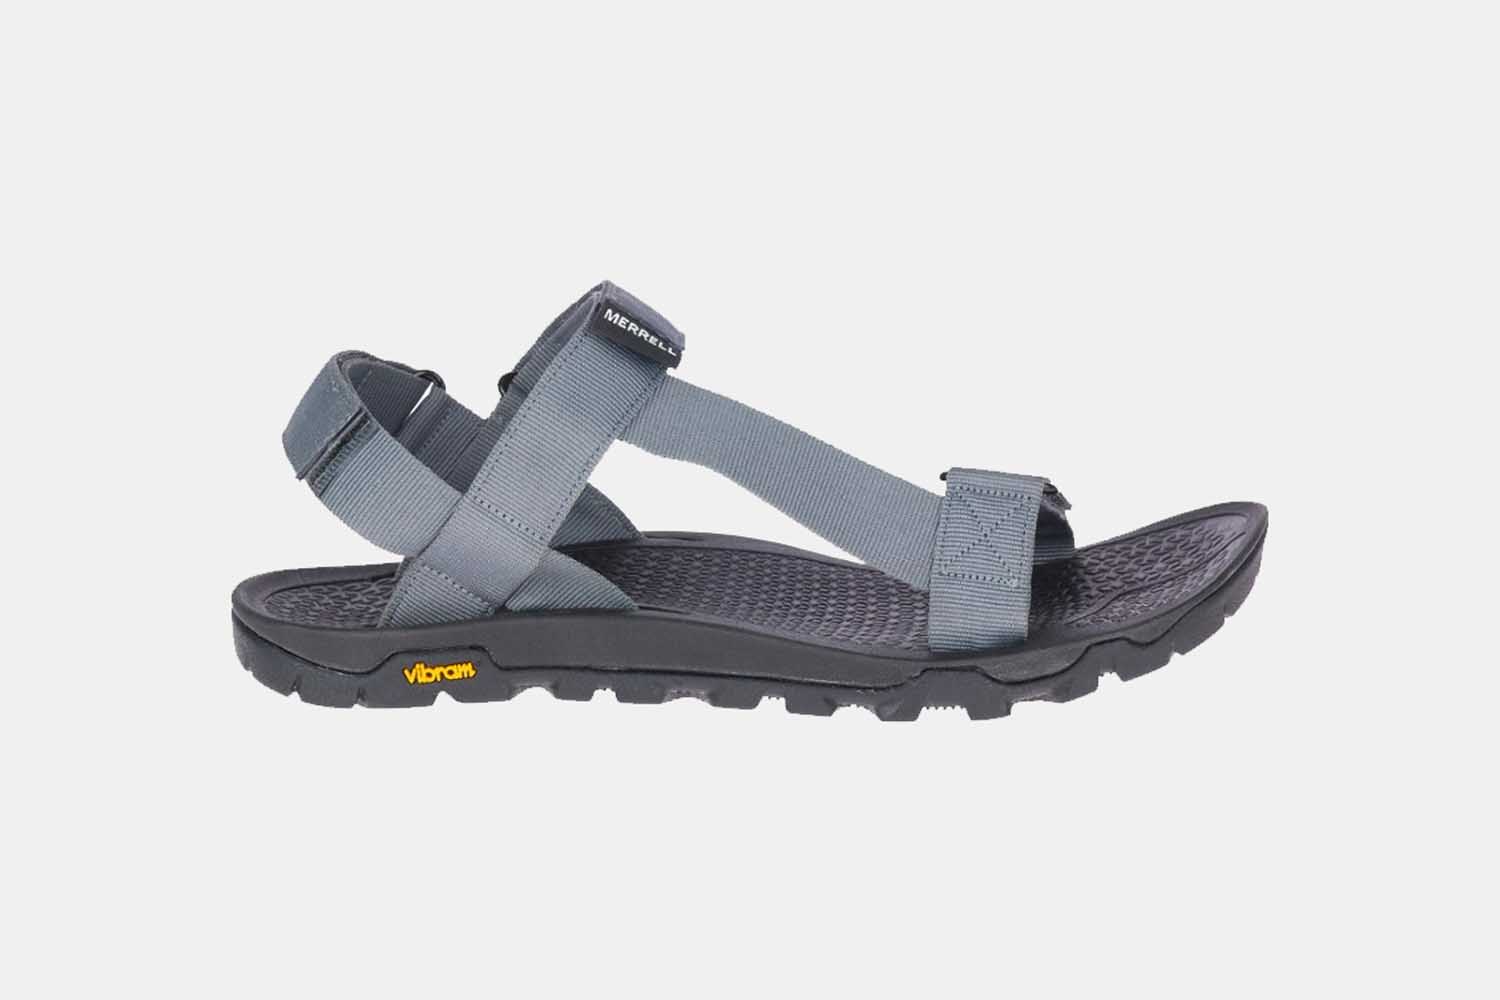 Merrell Breakwater Strap Multisport Sandals